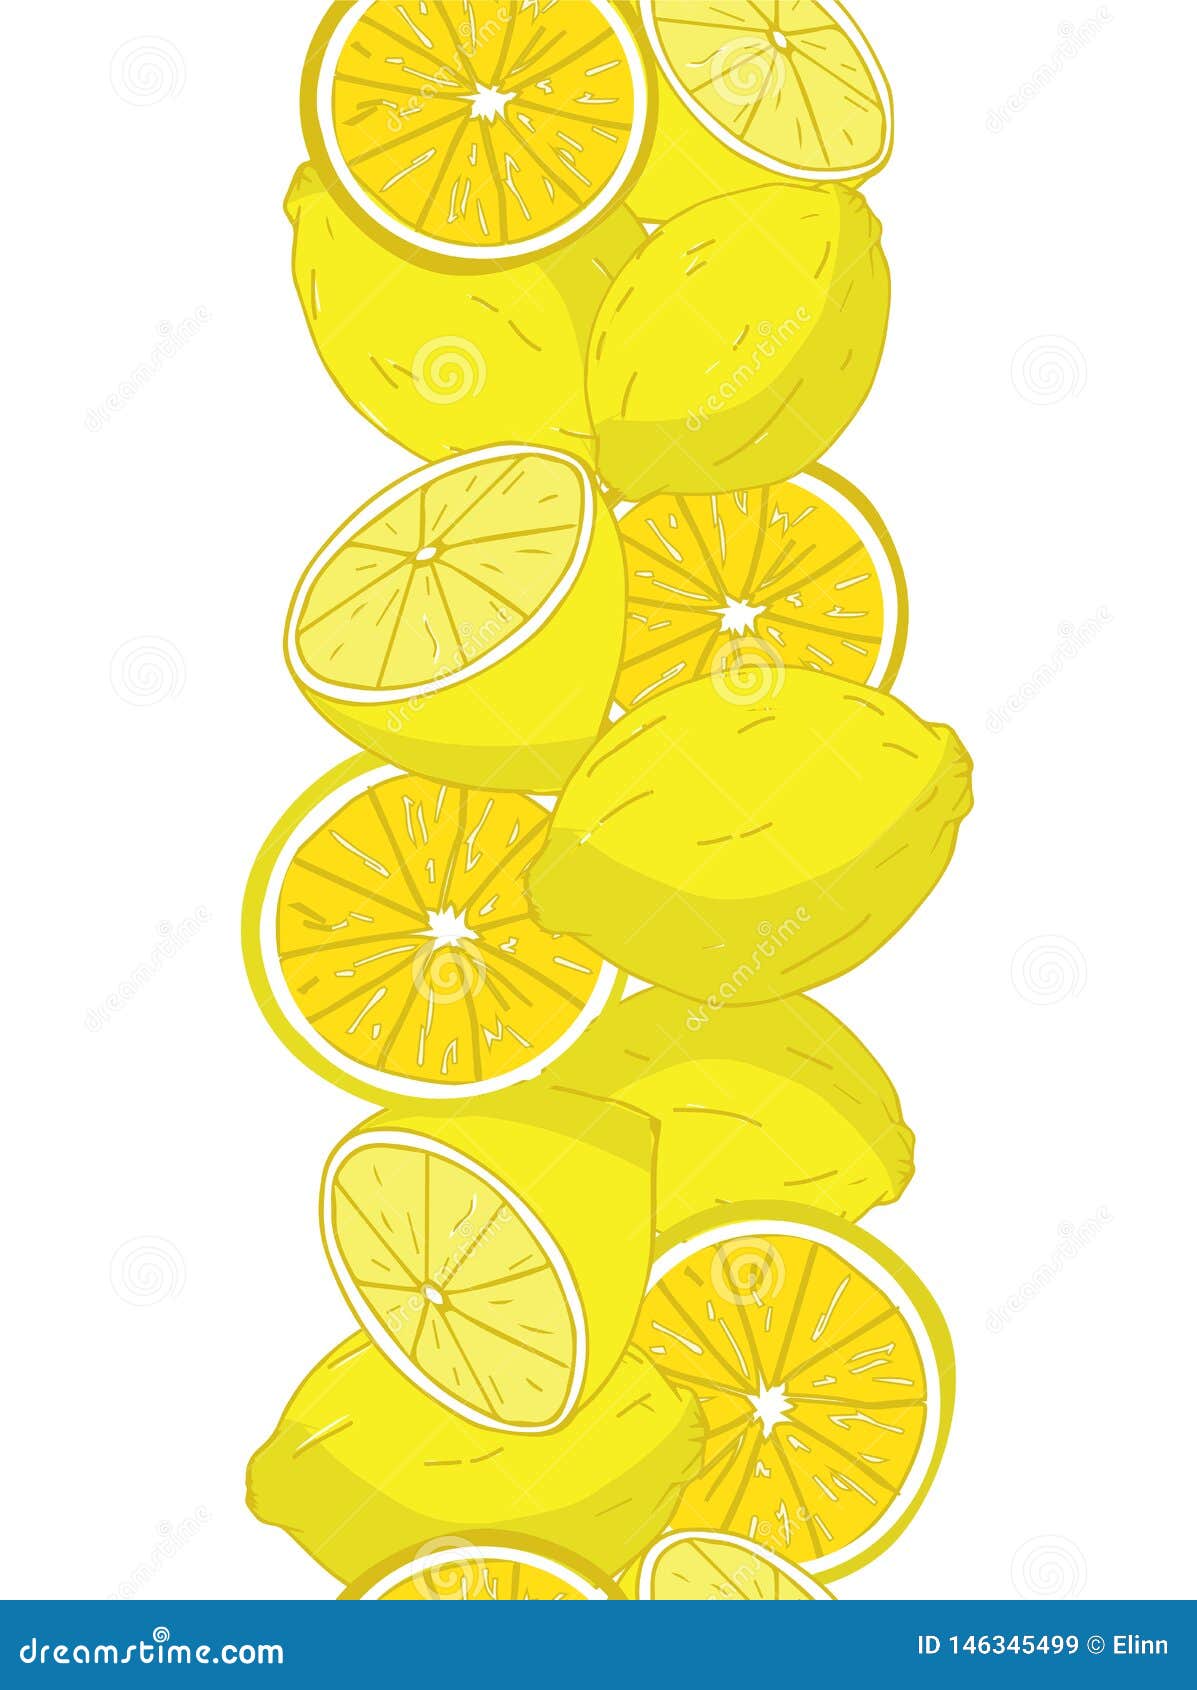 Vertical Seamless Border Pattern with Lemons Stock Vector ...